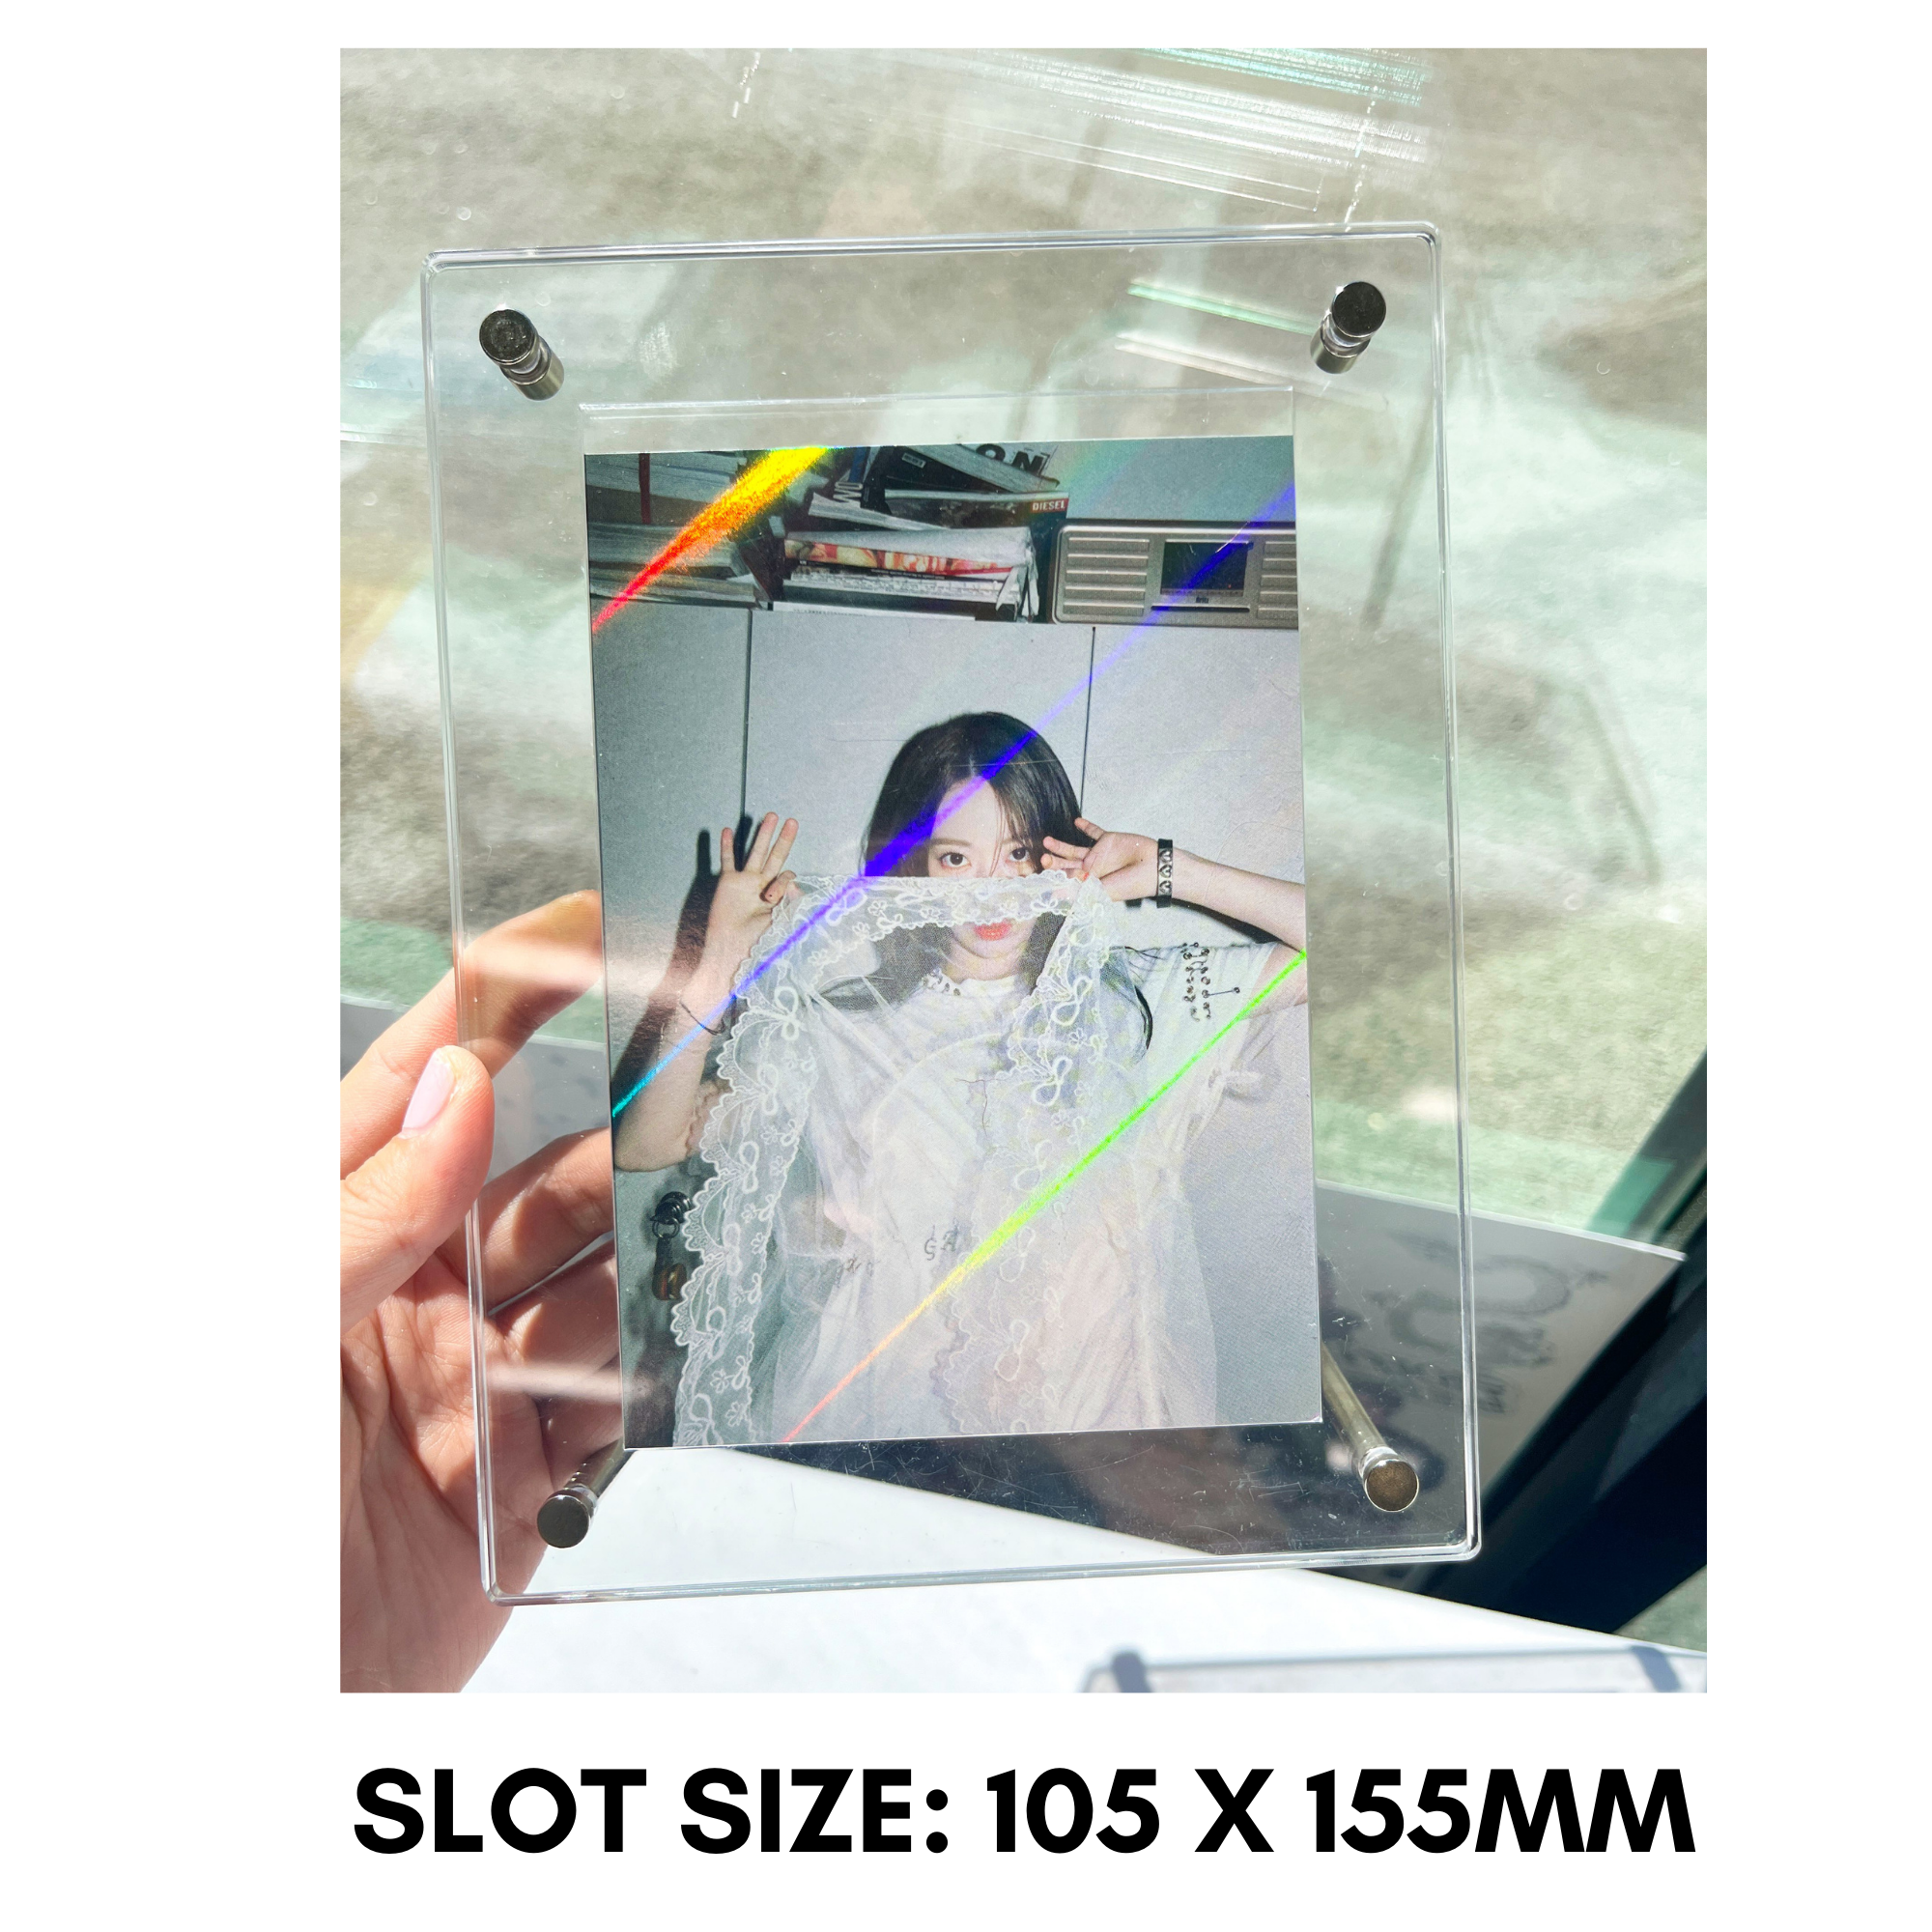 K-KEEP Acrylic Display Frame - [1 Postcard Frame] Slot Size